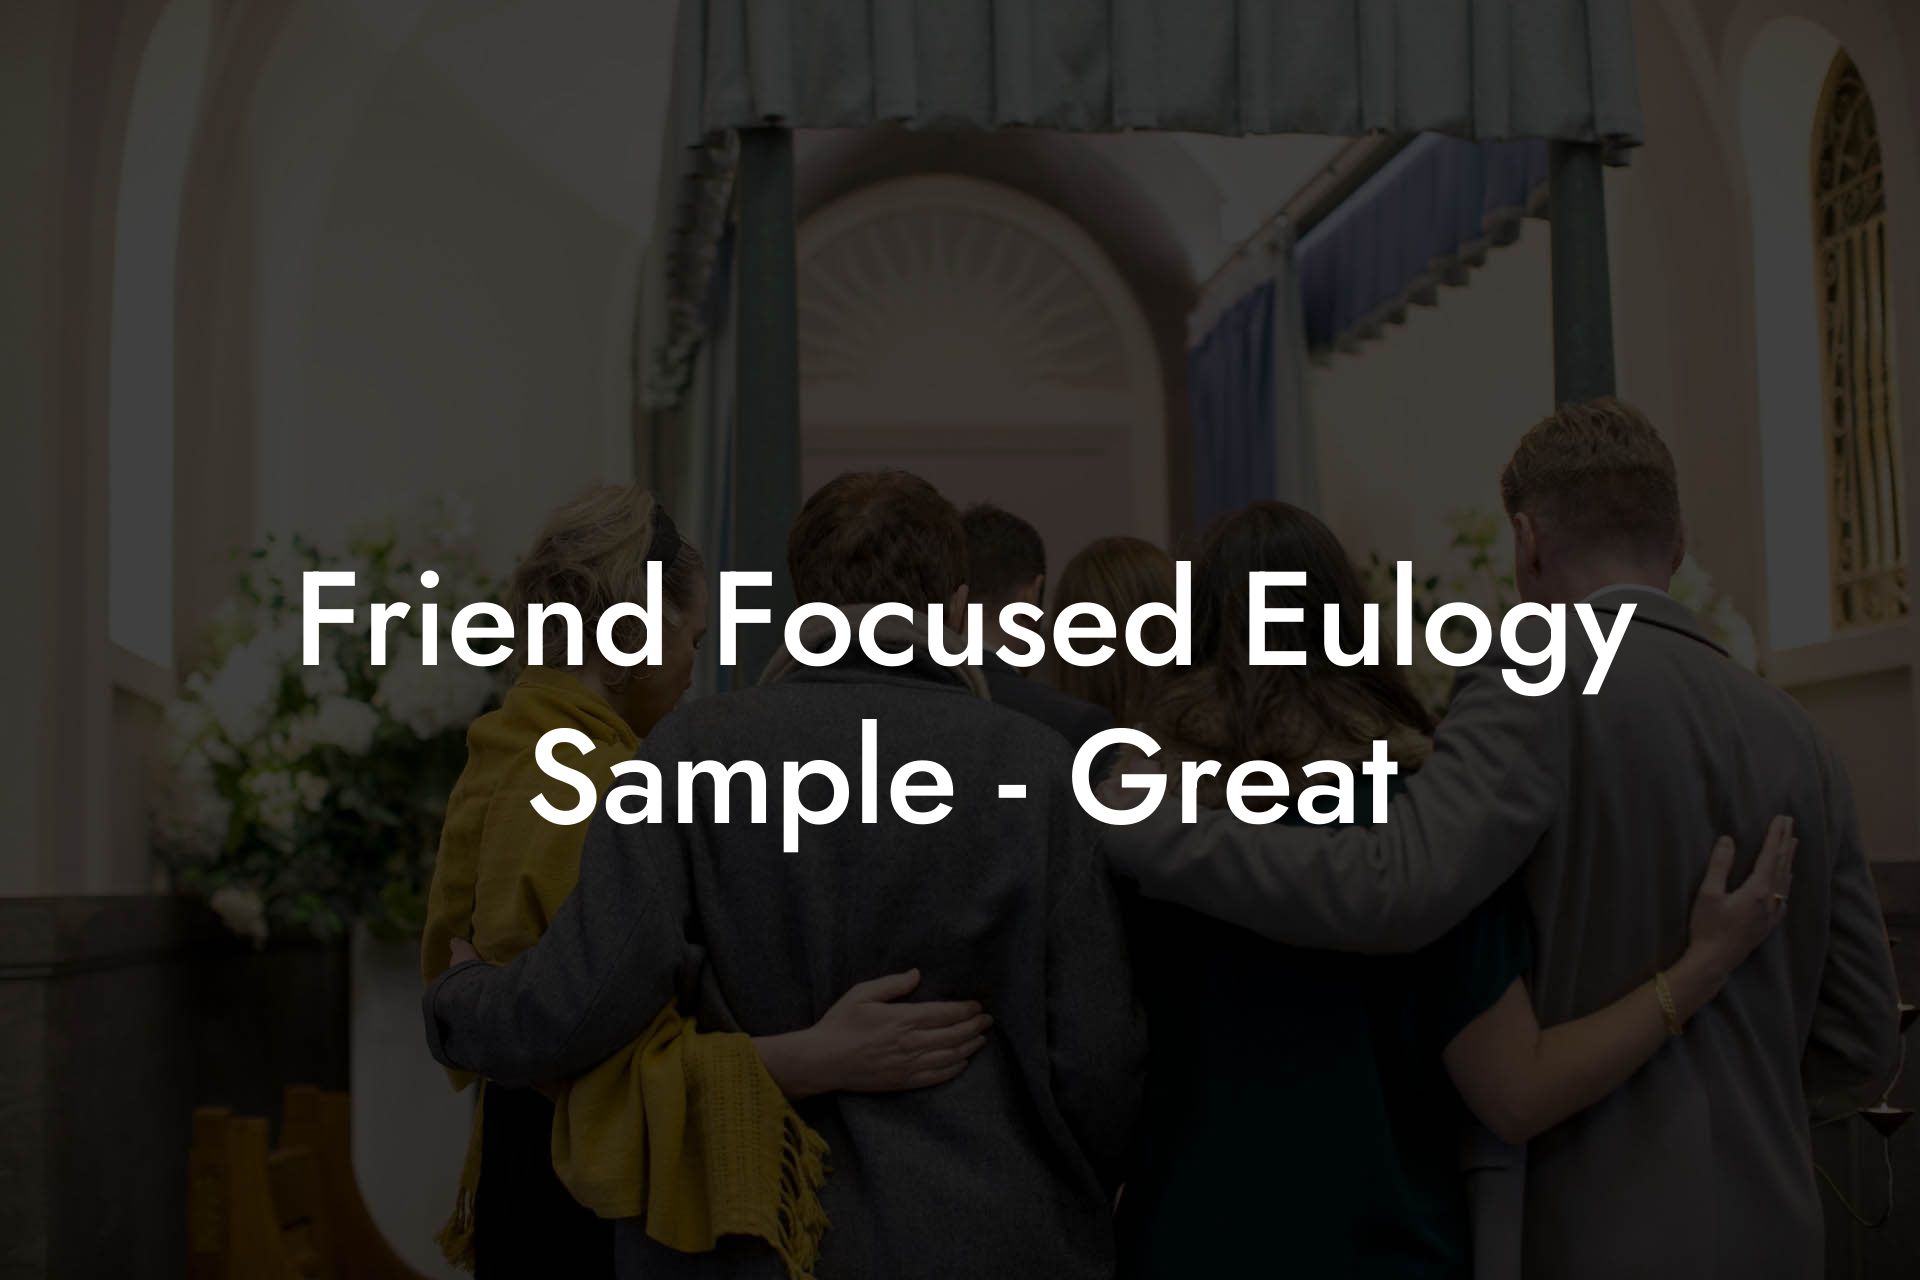 Friend Focused Eulogy Sample - Great